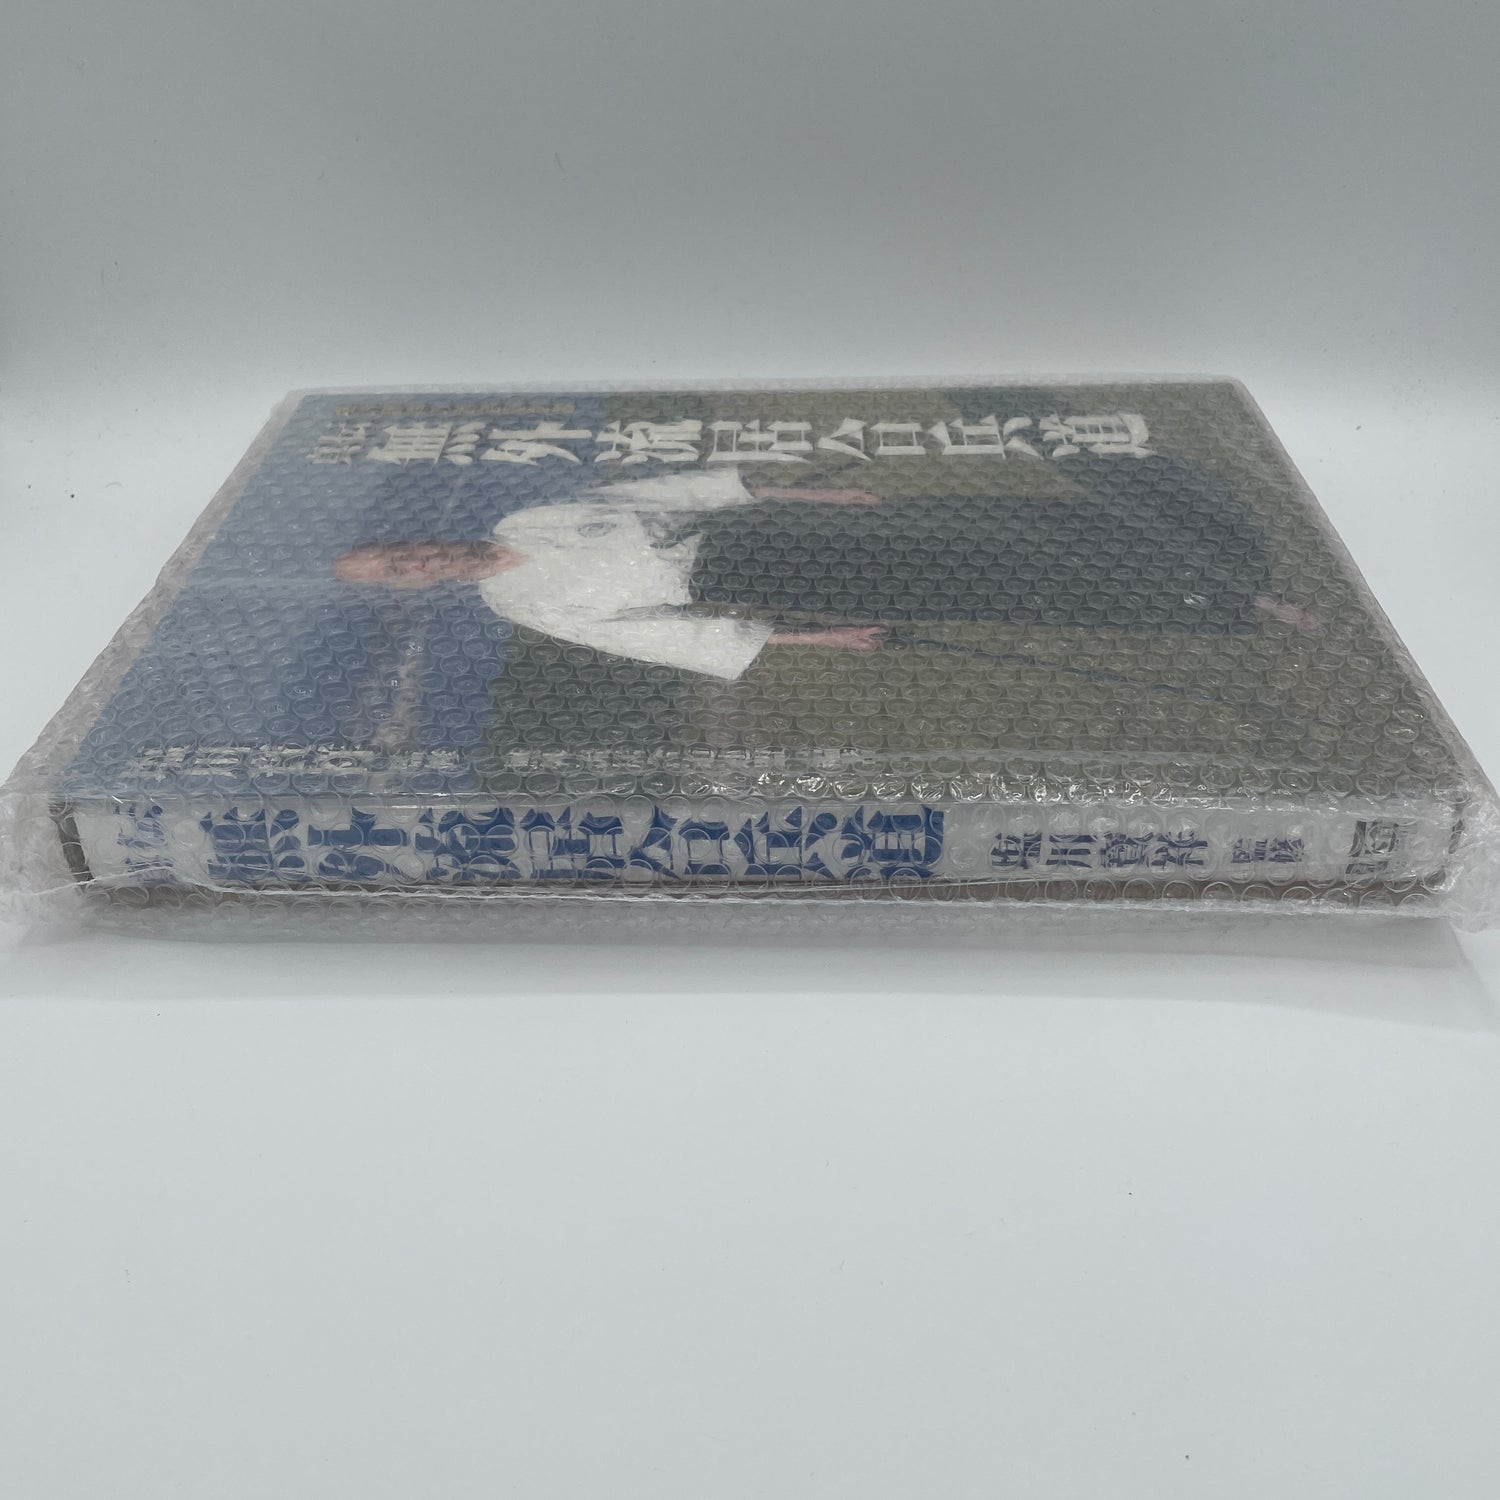 Mugai Ryu Iaihyodo Kyohan (Hardcover) Book by Hosho Shiokawa (Preowned)